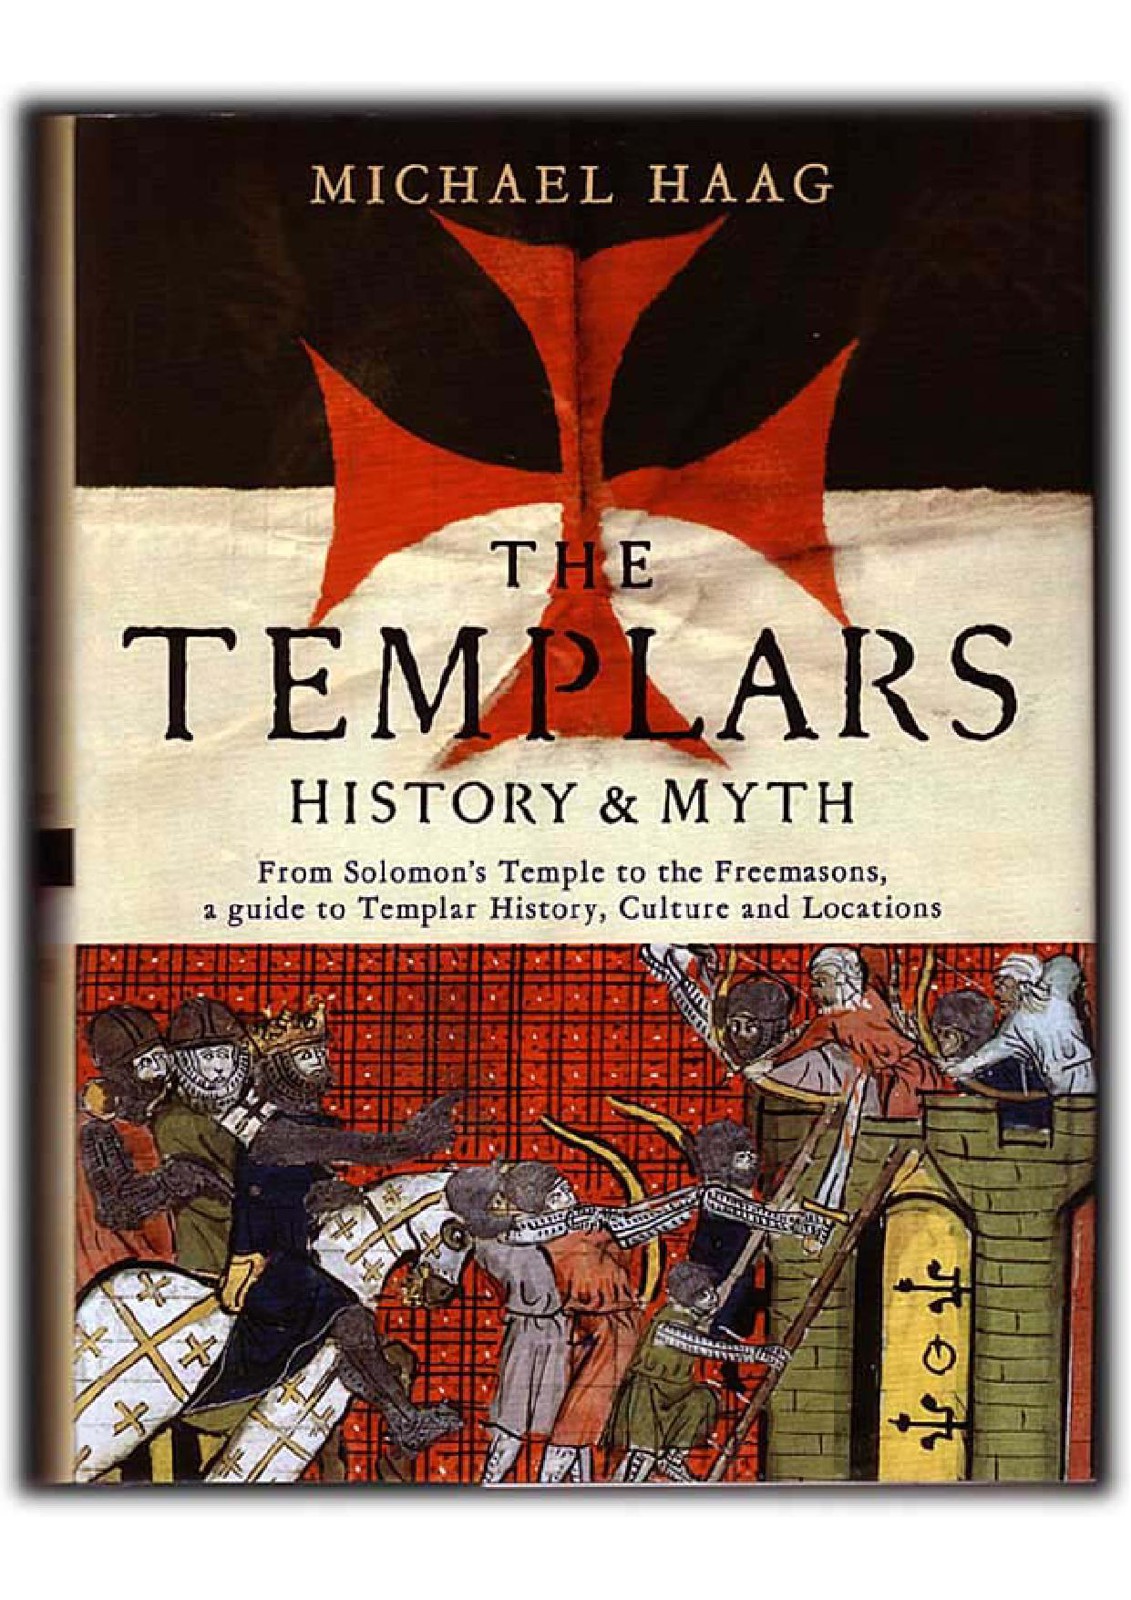 The Templars History & Myth - Michael Haag (2009)